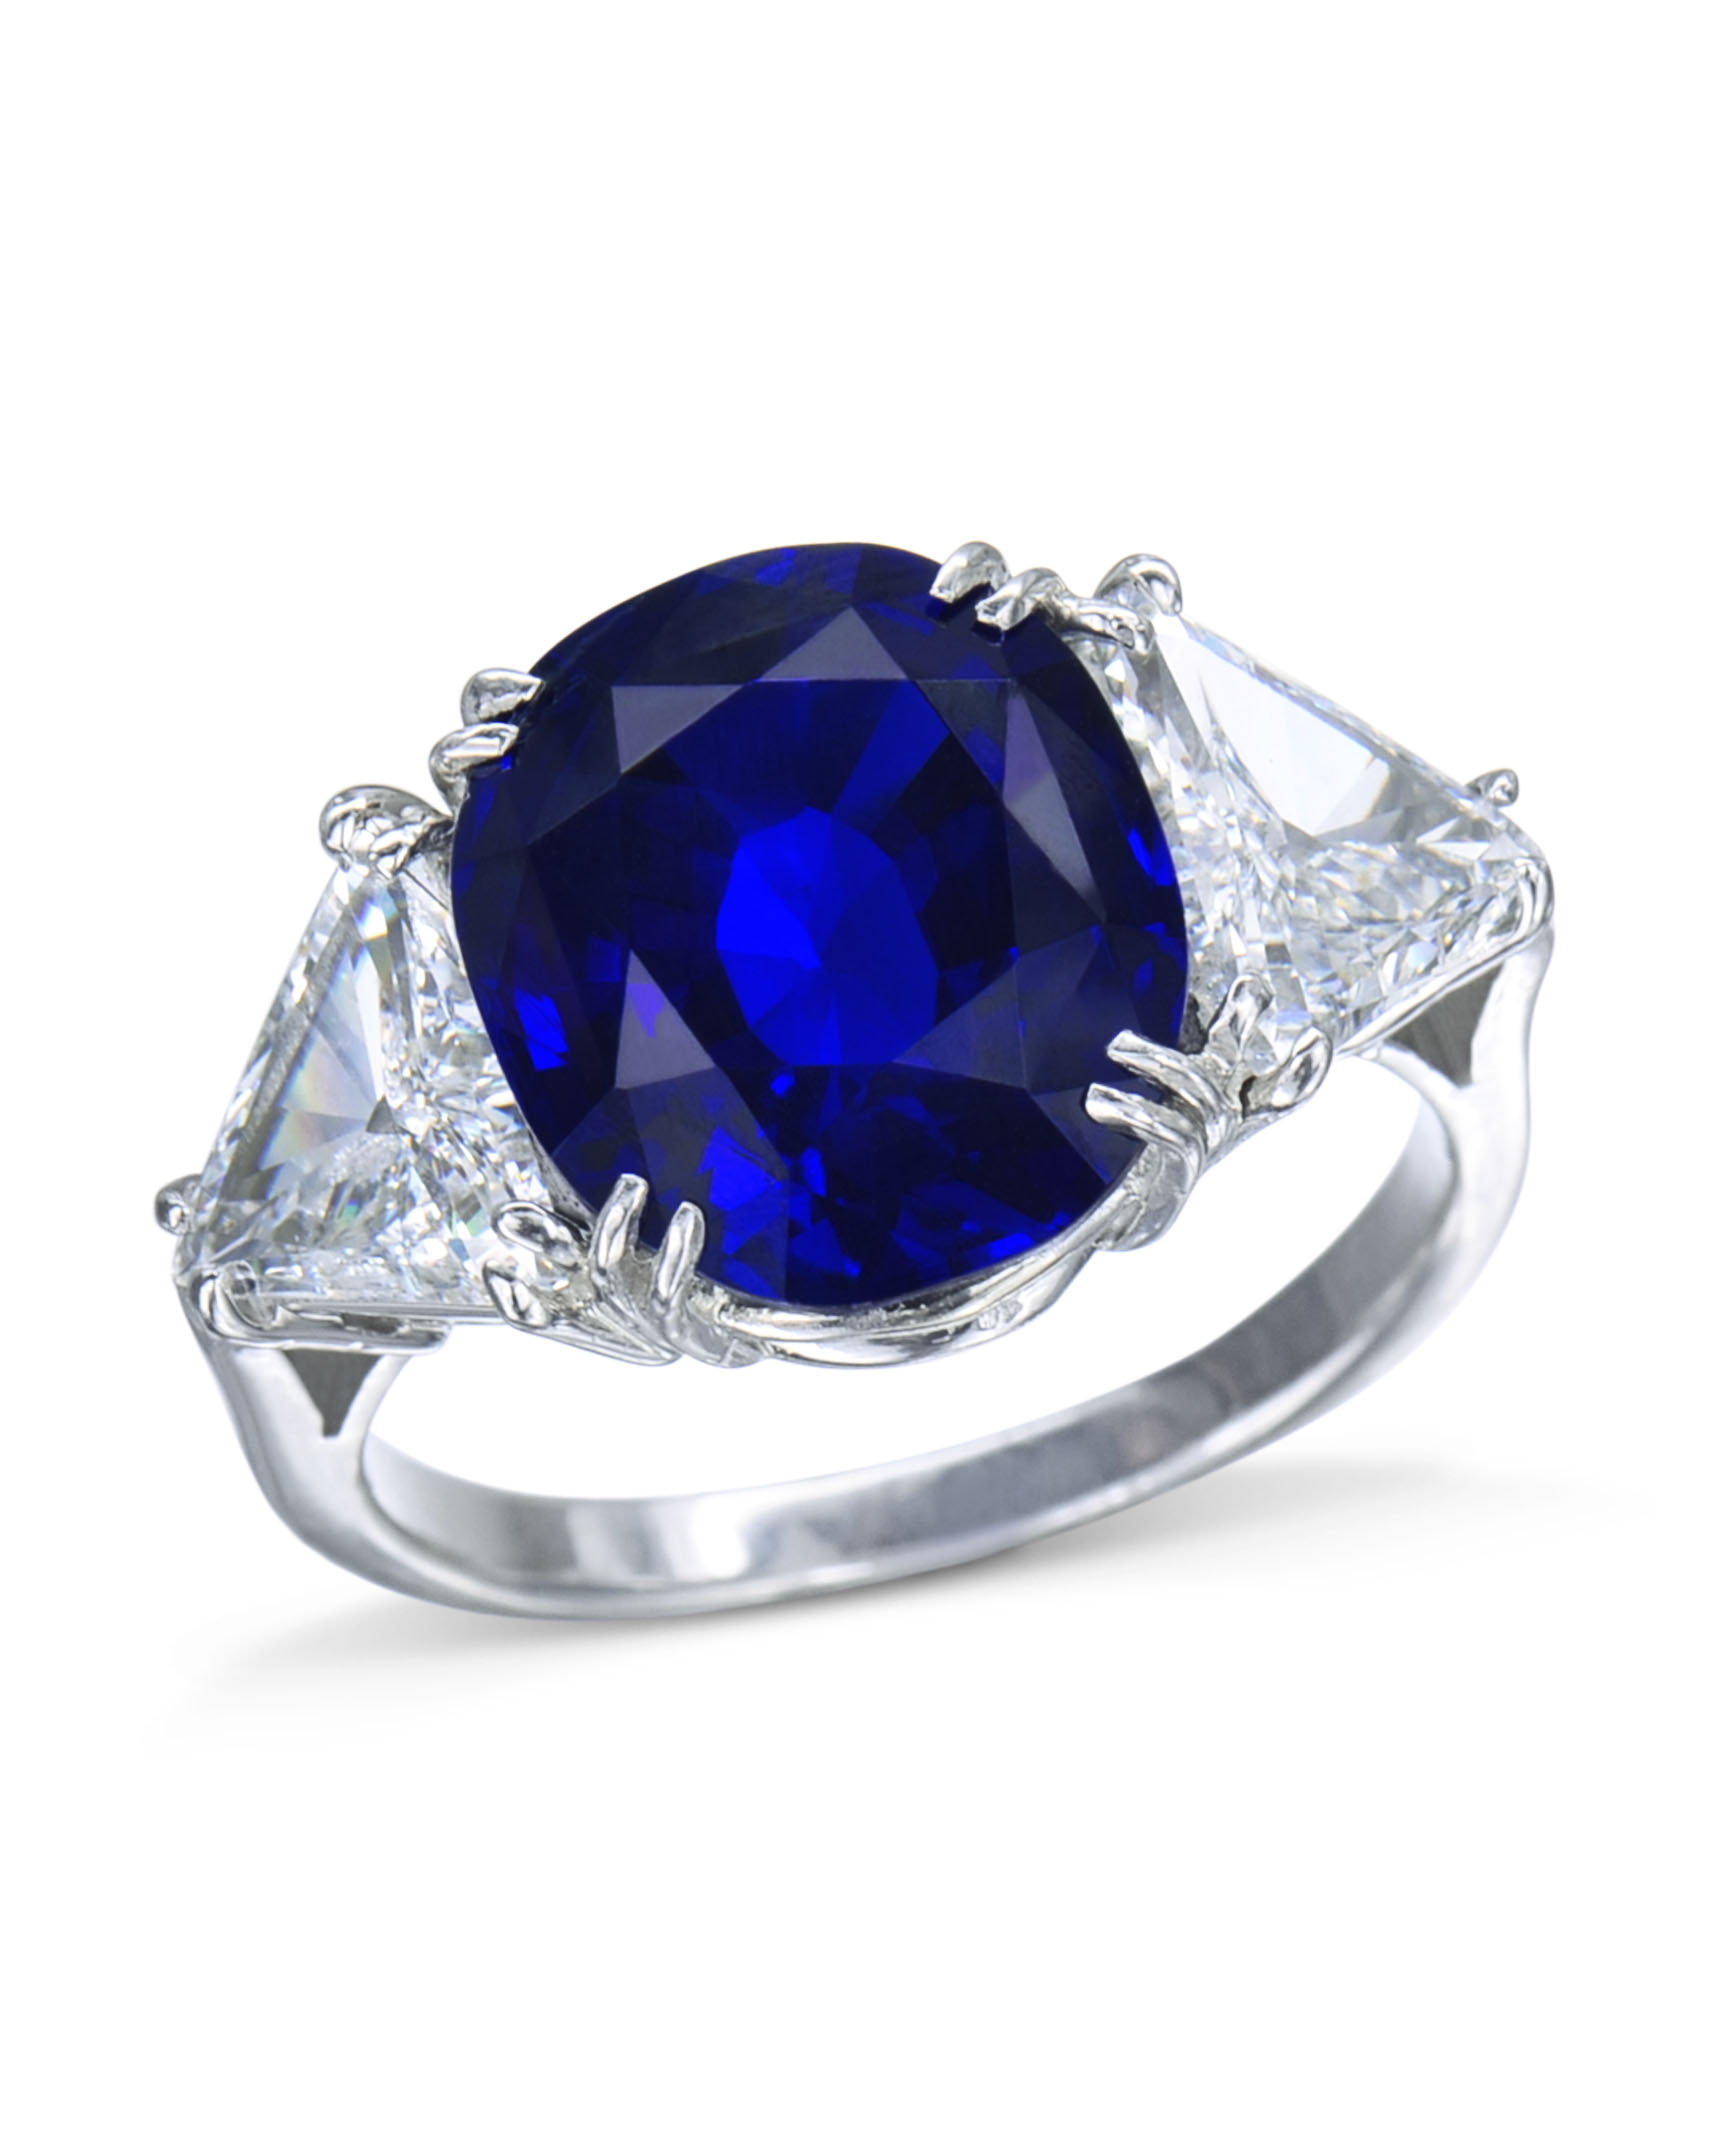 Exquisite Oval Sapphire and Diamond Ring - Turgeon Raine